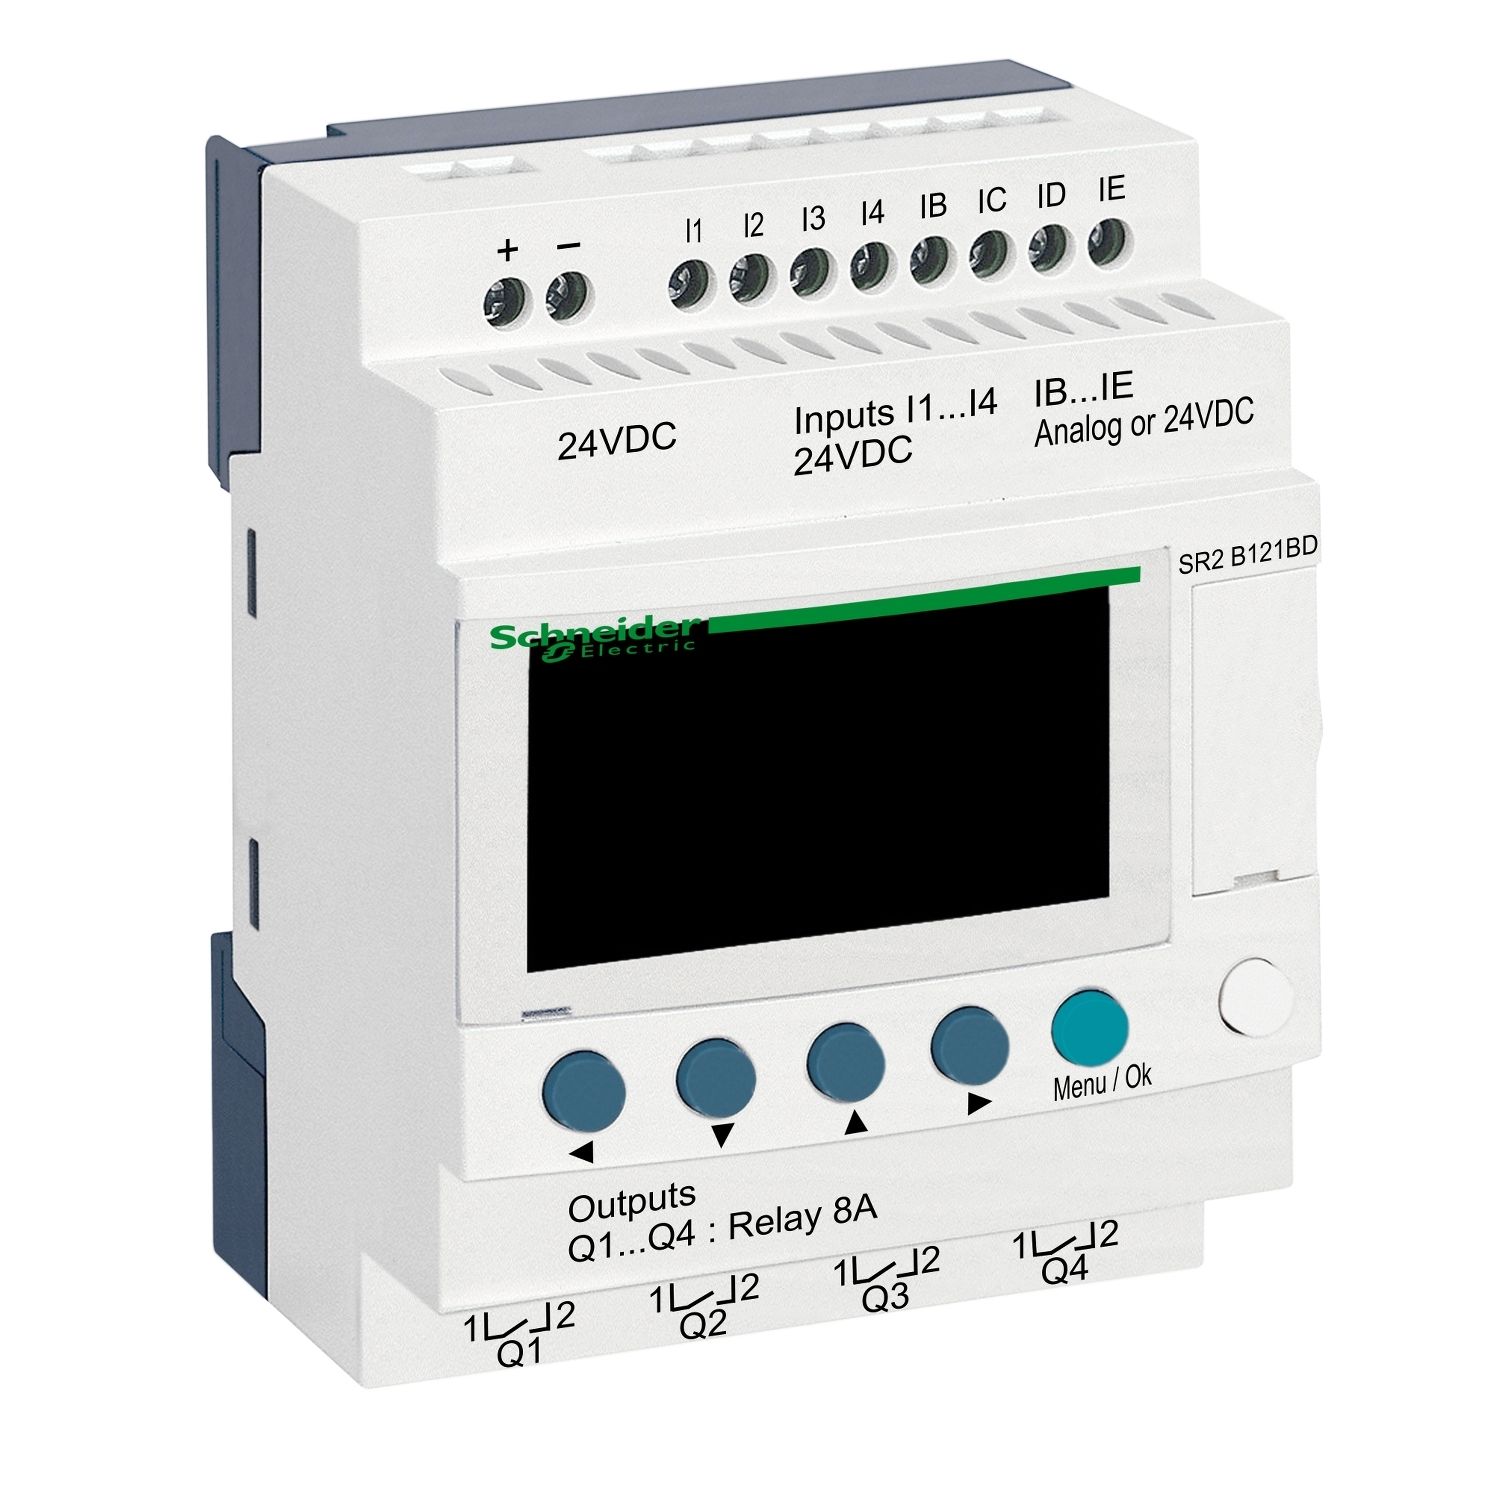 SR2B121BD compact smart relay, Zelio Logic SR2 SR3, 12 IO, 24V DC, clock, display, 4 relay outputs